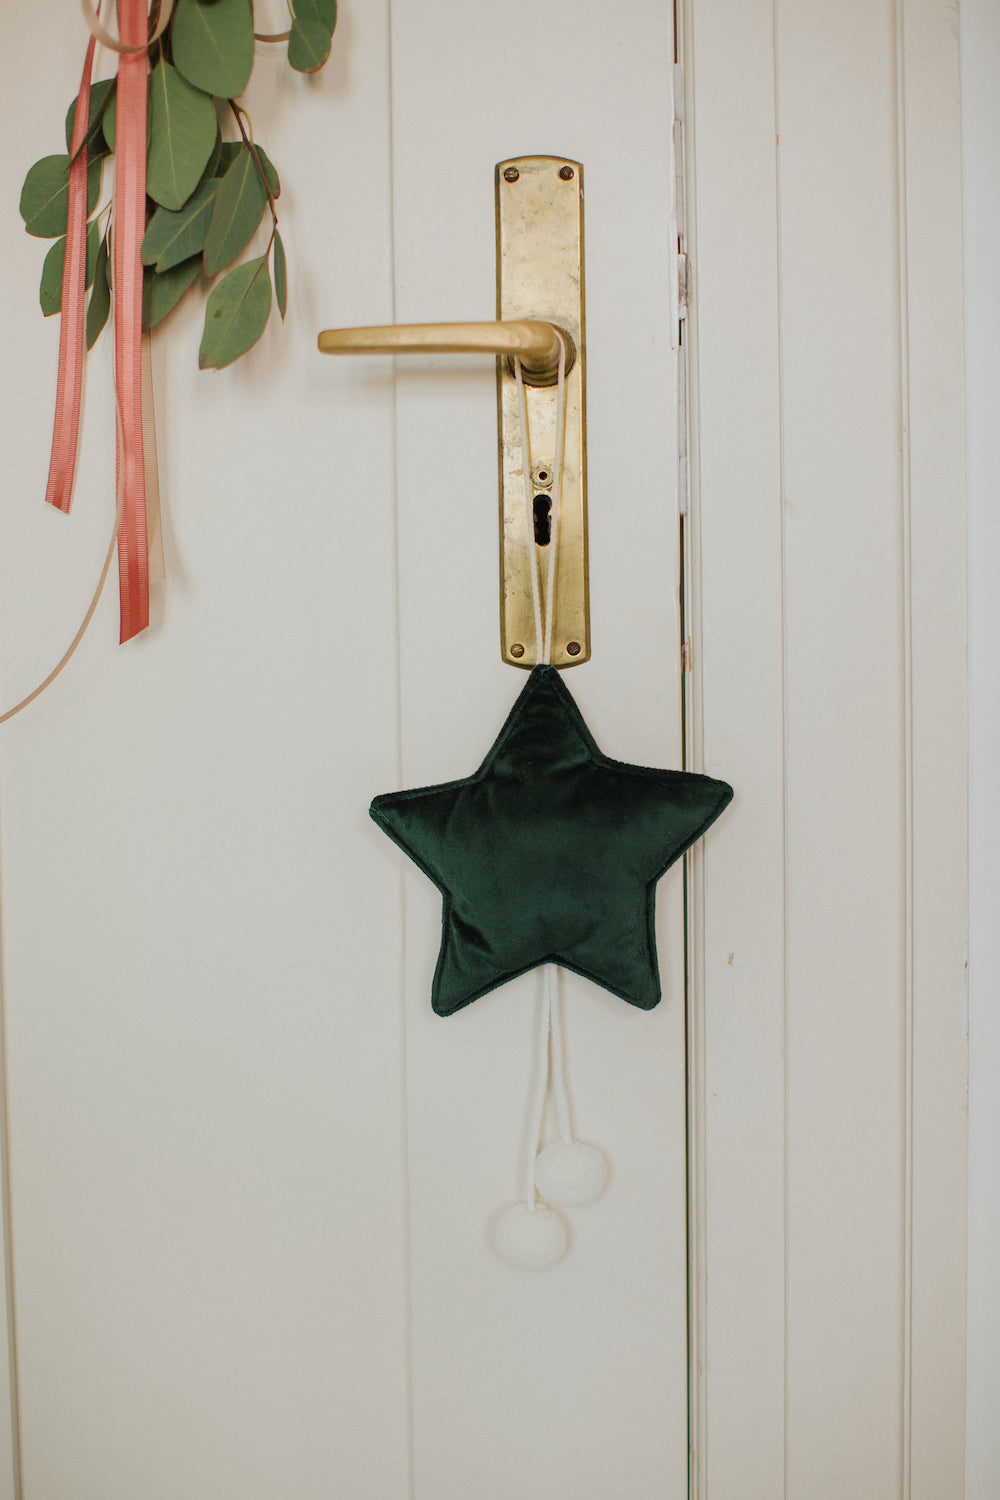 velvet little star pendant green by bettys home hanging on door handle as christmas decoration